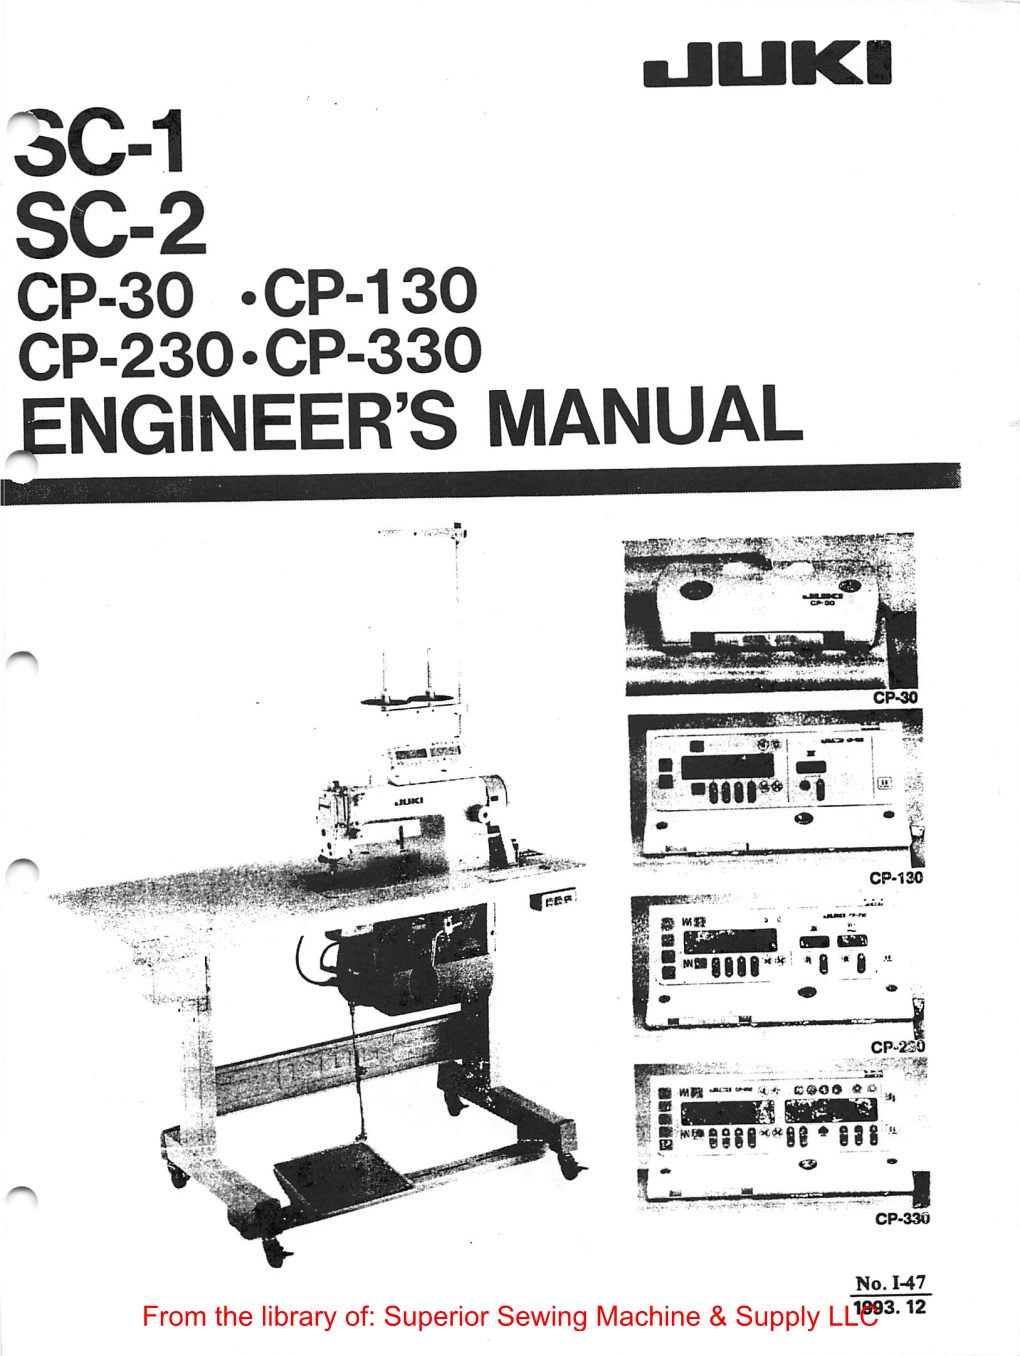 Cp-330 Engineer's Manual